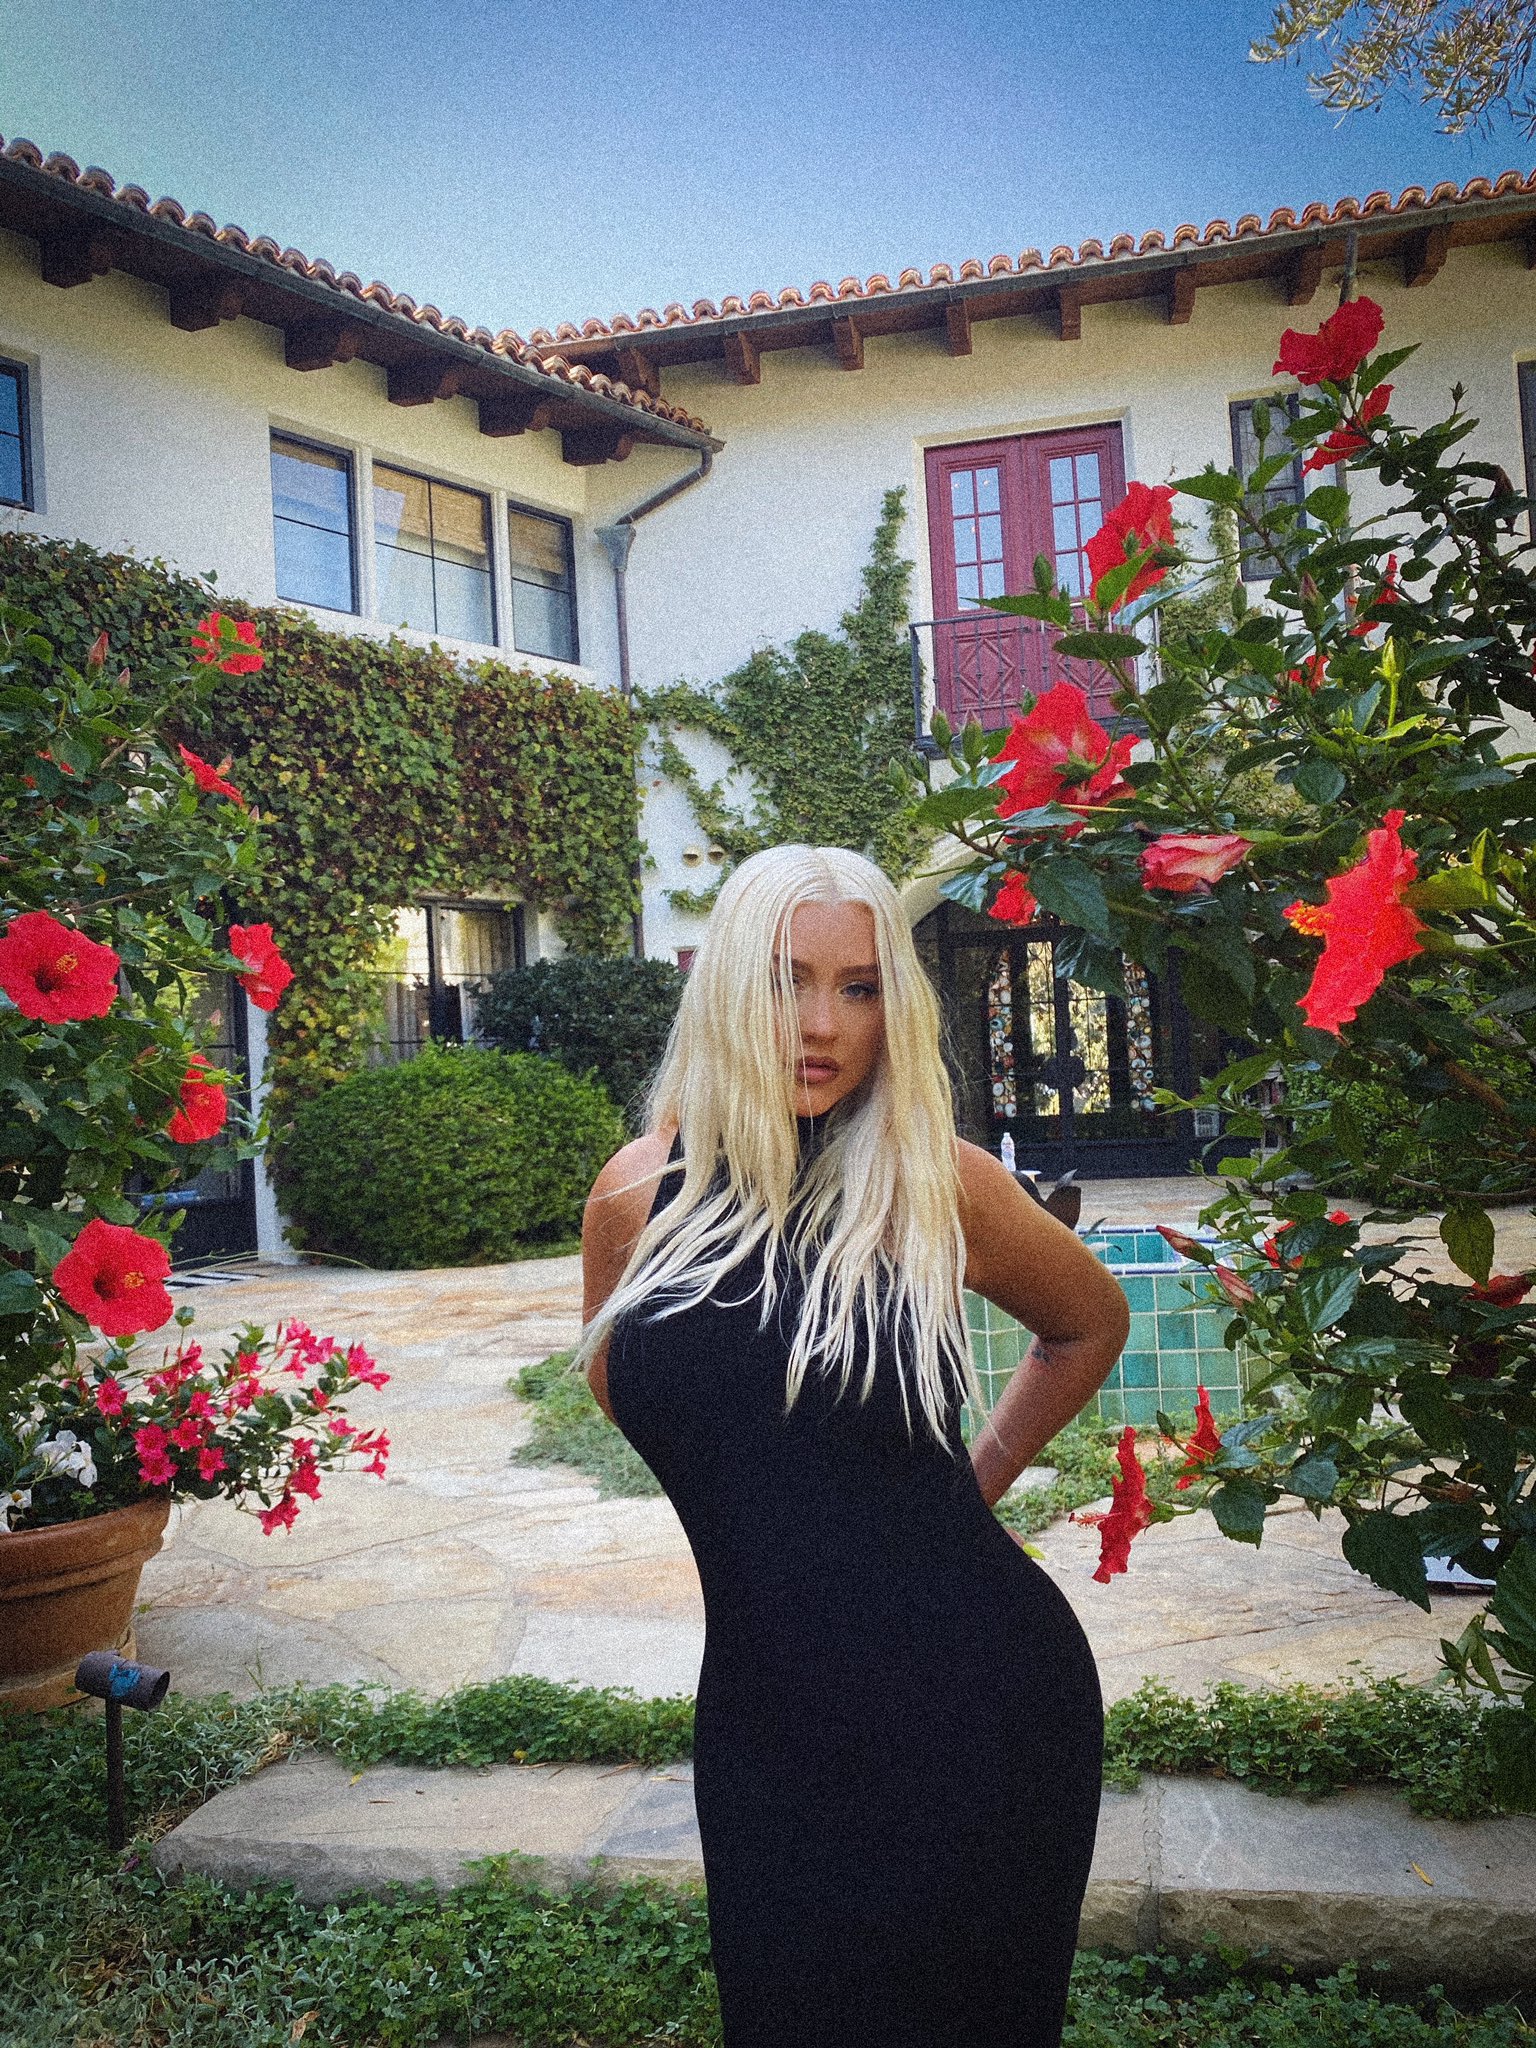 Fotos n°4 : Christina Aguilera se est poniendo espeluznante!